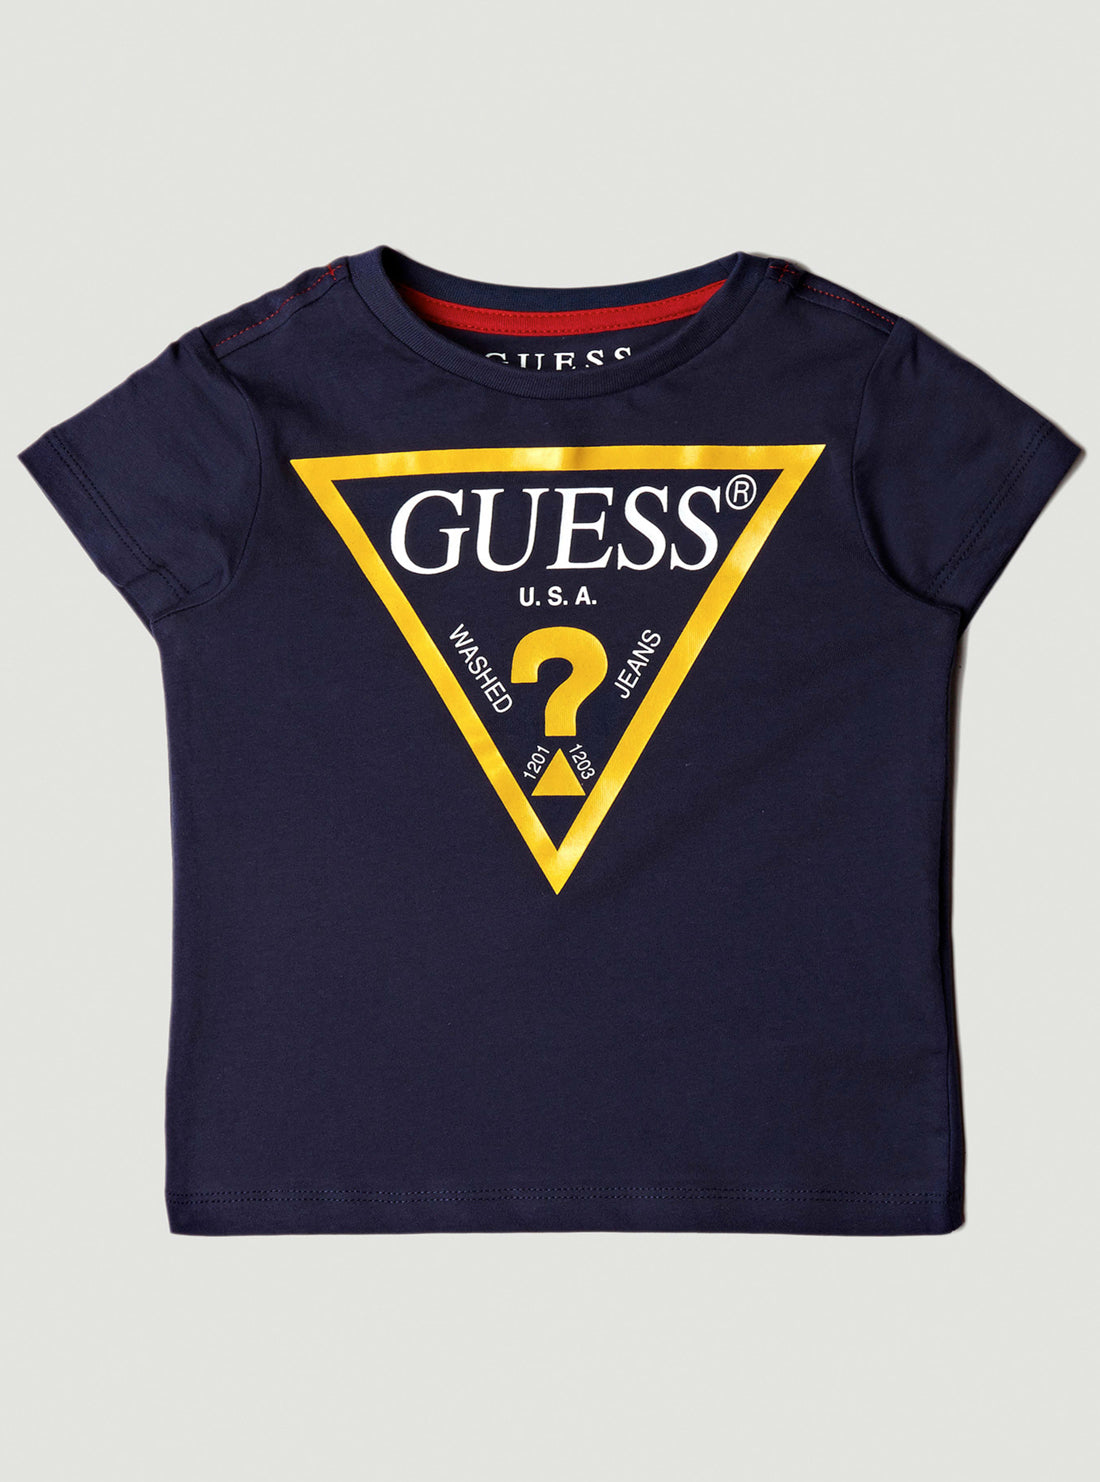 GUESS Little Boys Navy Blue Logo Short Sleeve T-Shirt (2-7)  N73I55K8HM0 Front View